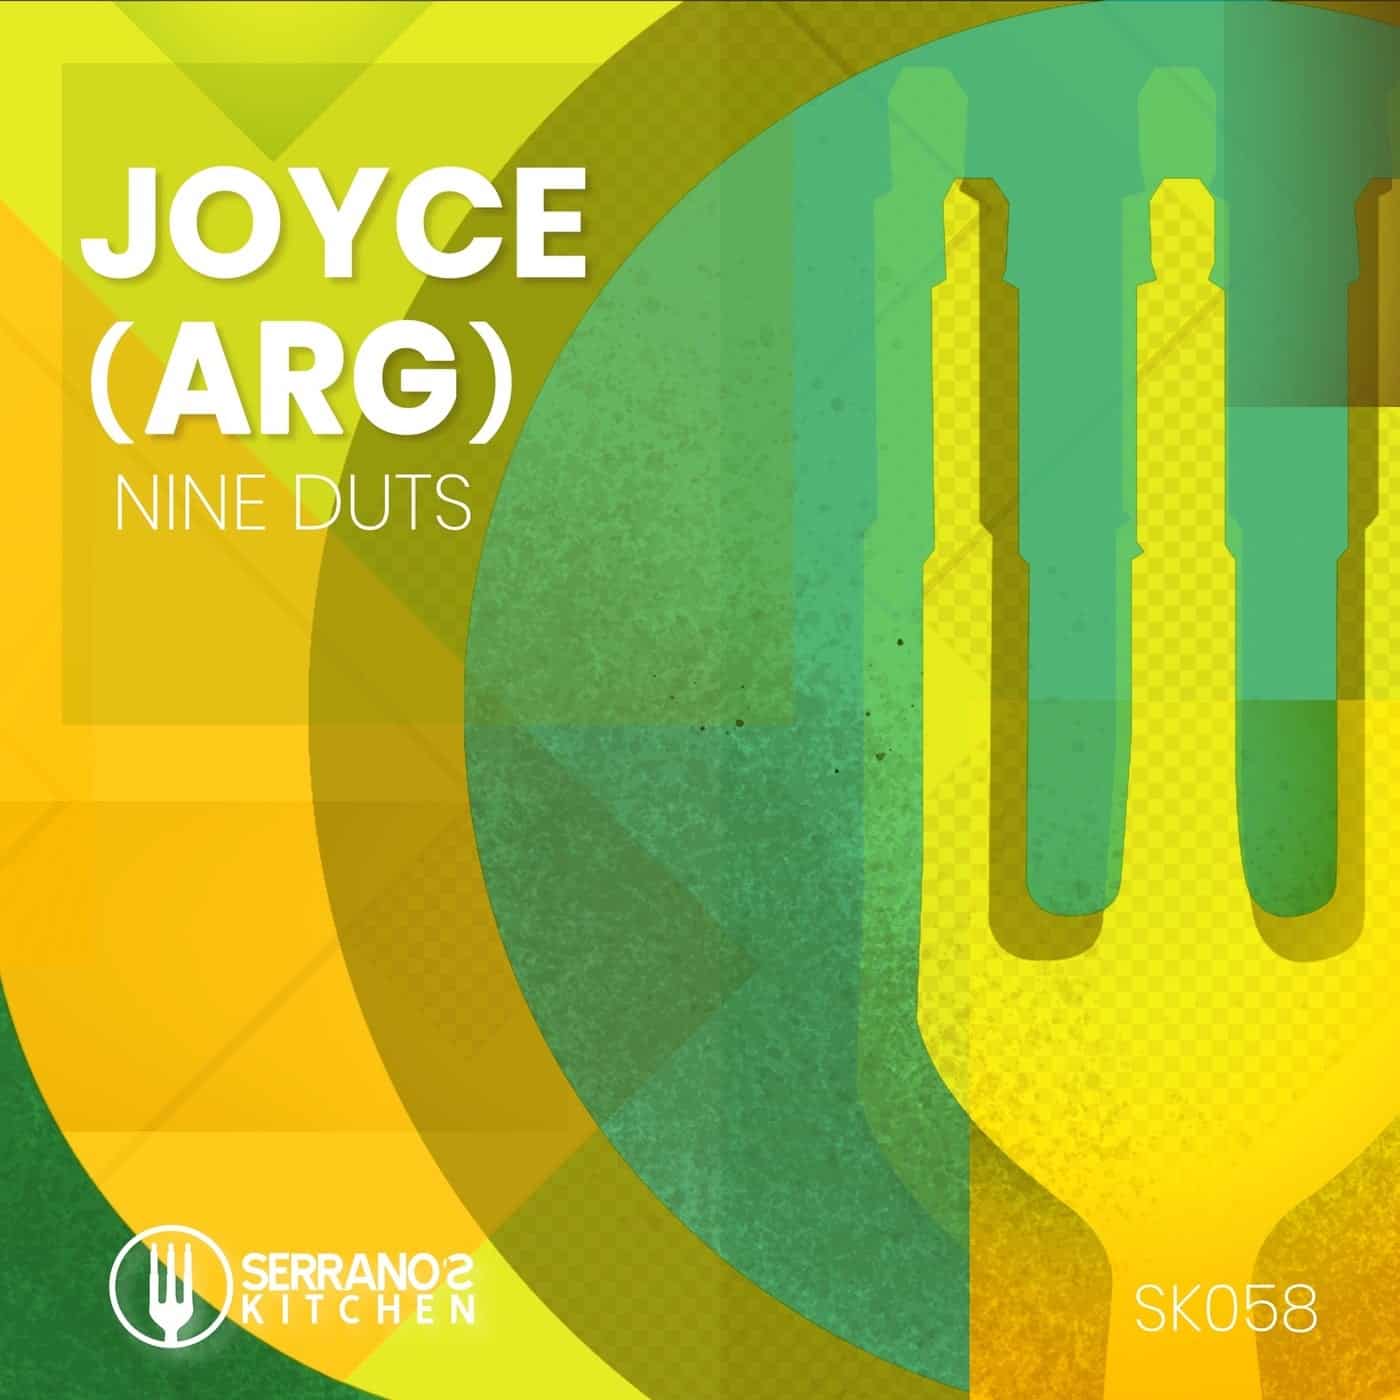 Download Joyce (ARG) - Nine Duts on Electrobuzz